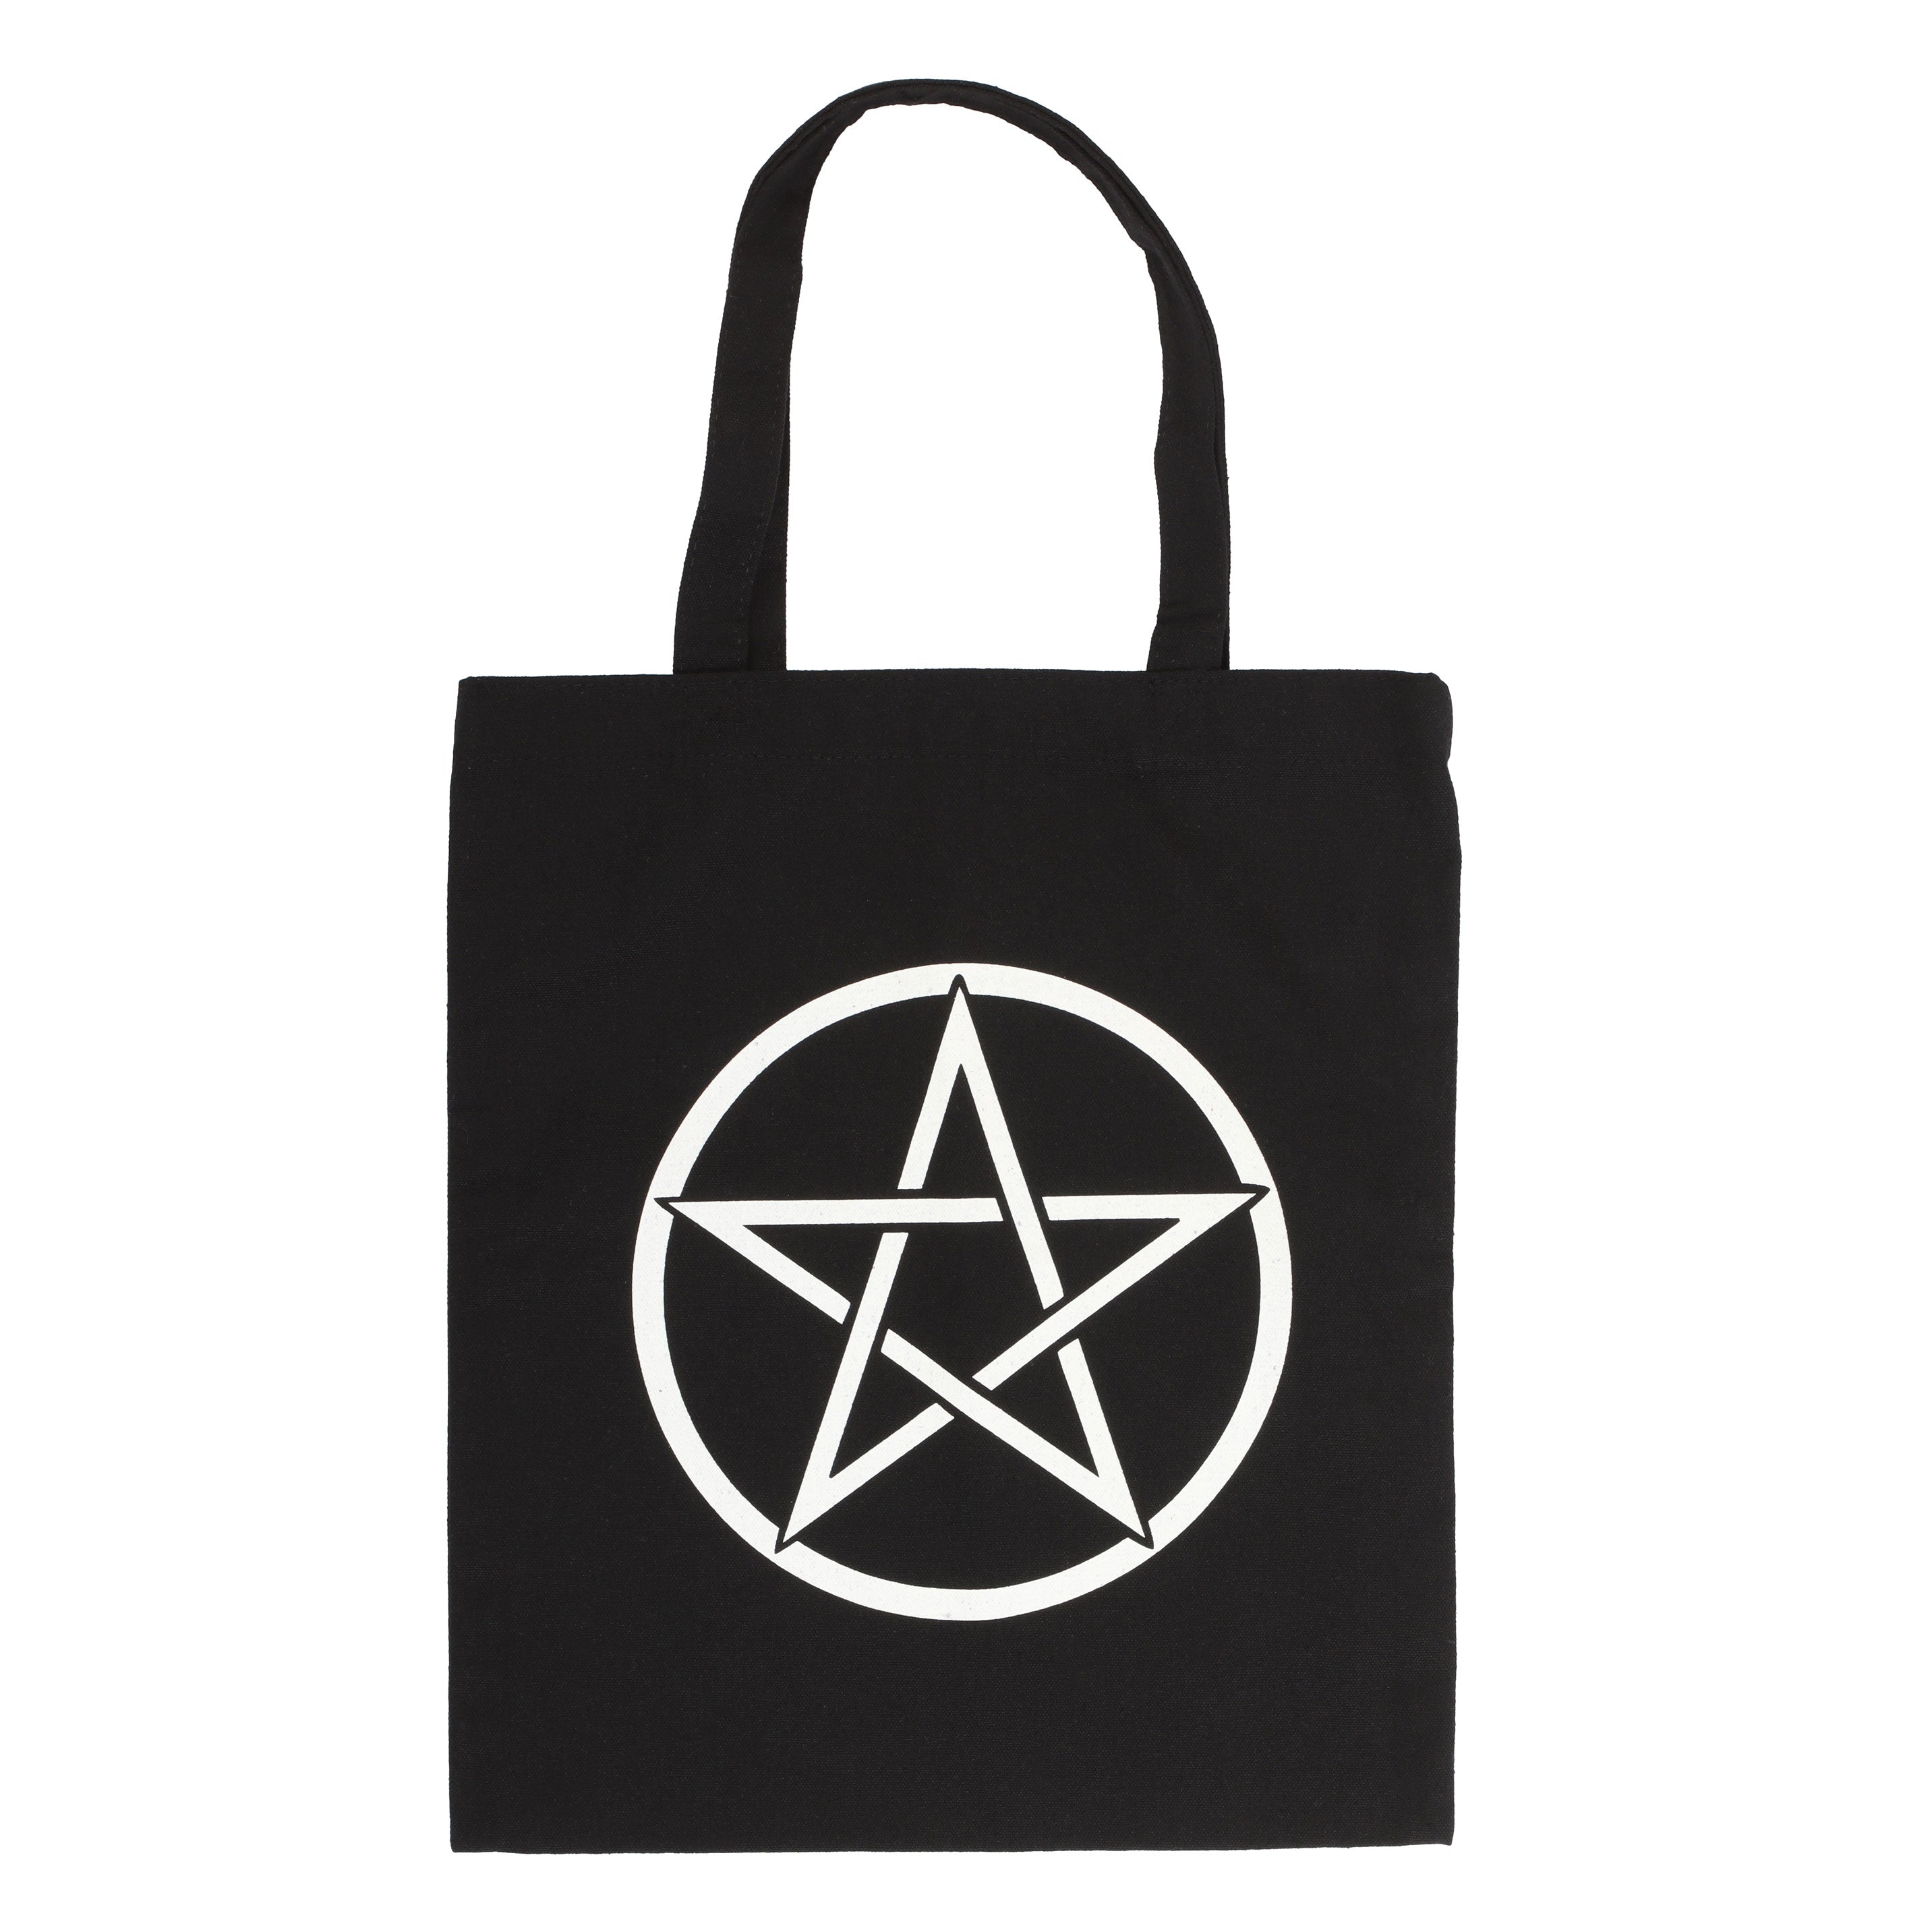 View Pentagram Polycotton Tote Bag information